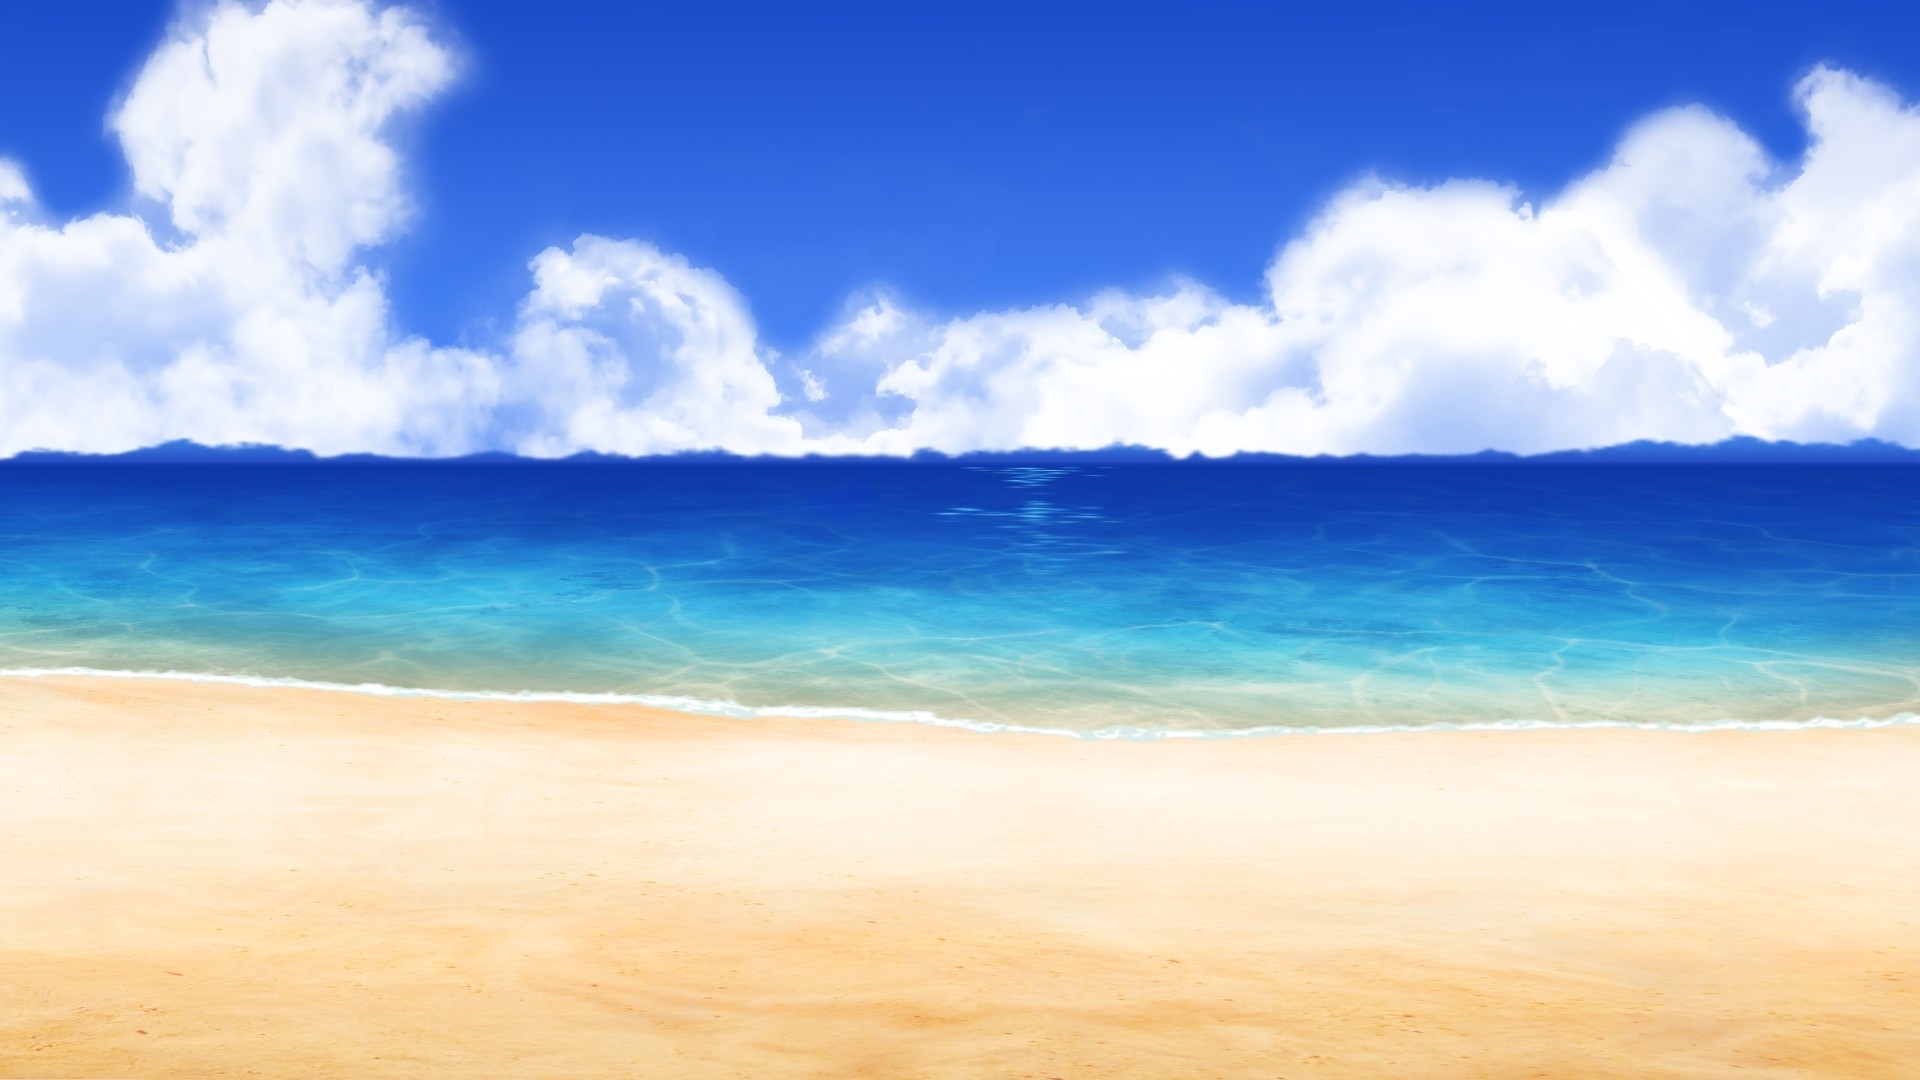 Anime Beach desktop wallpaper hd